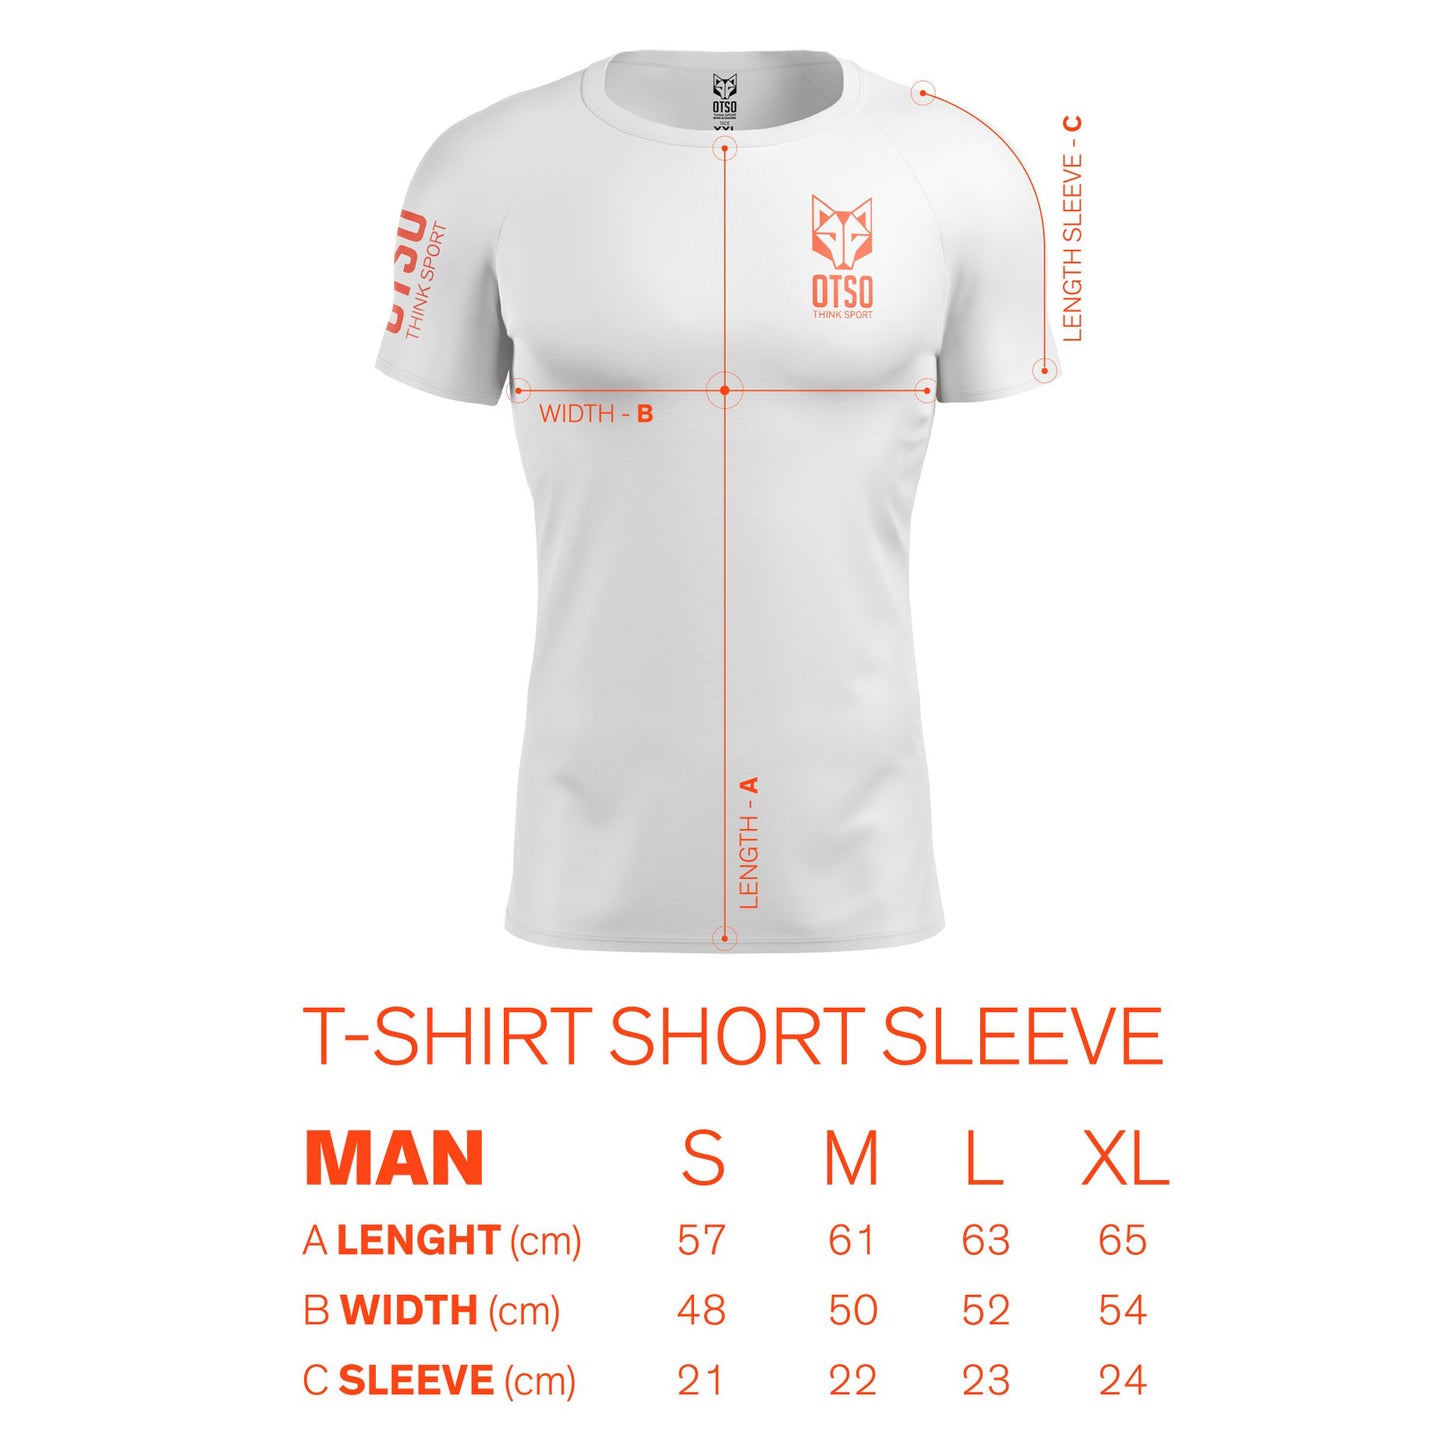 Gorilla Men's Short Sleeve T-Shirt